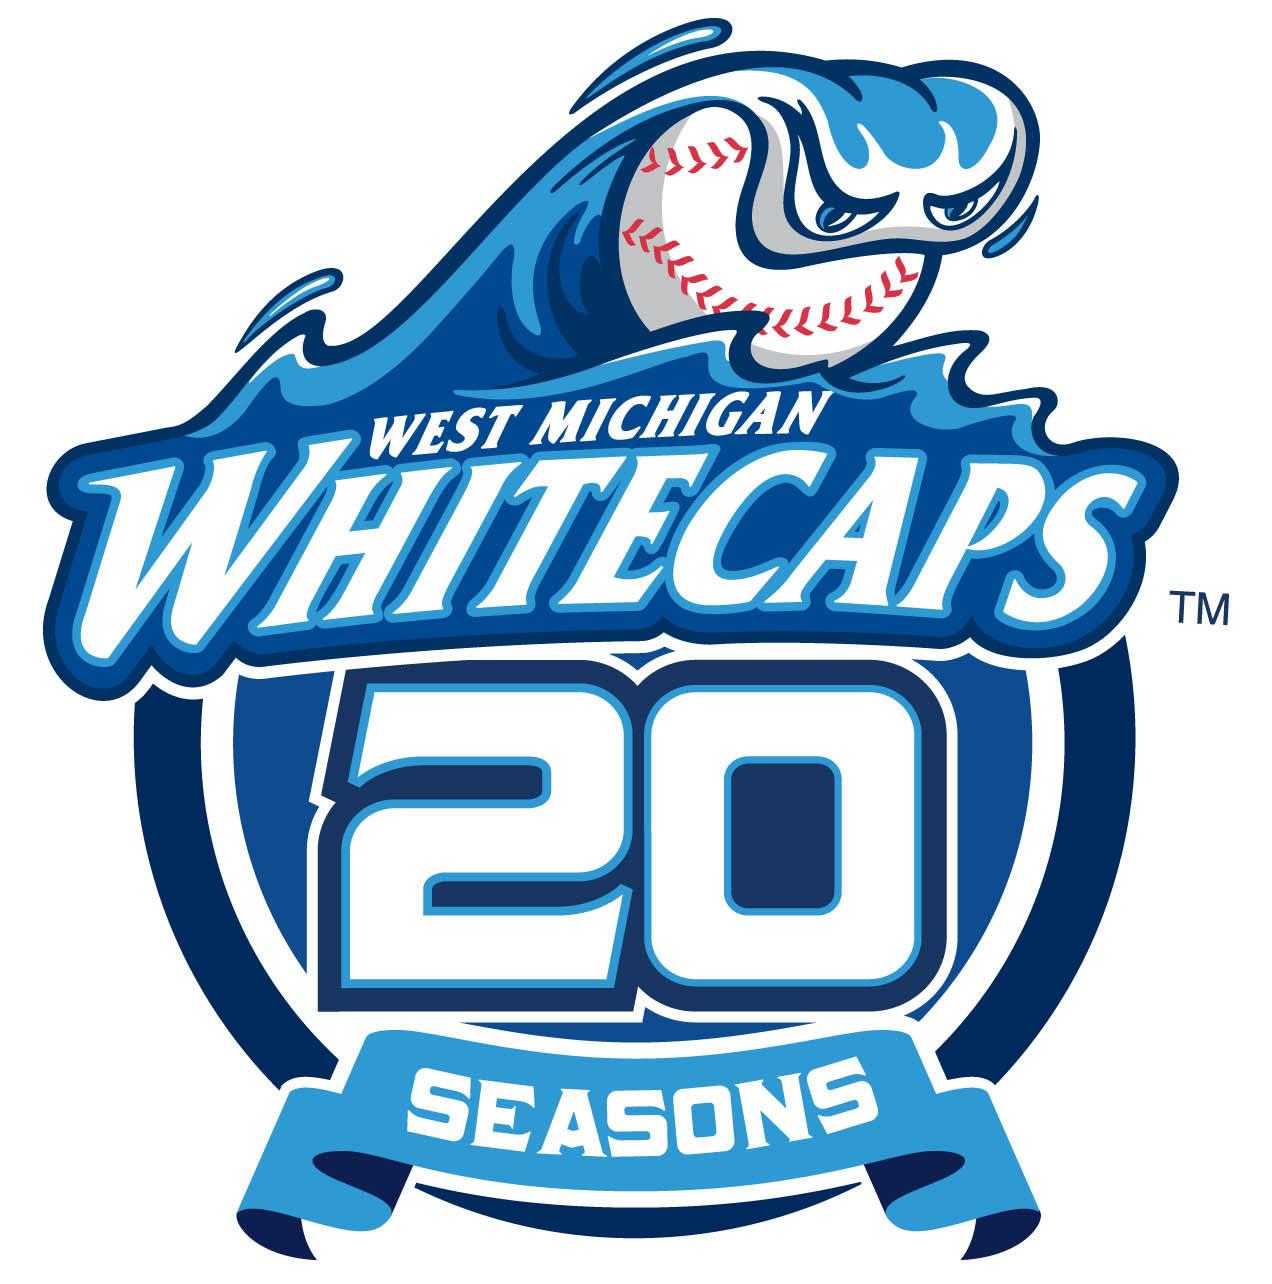 West Michigan Whitecaps 2013 anniversary logo iron on transfers for T-shirts.jpg